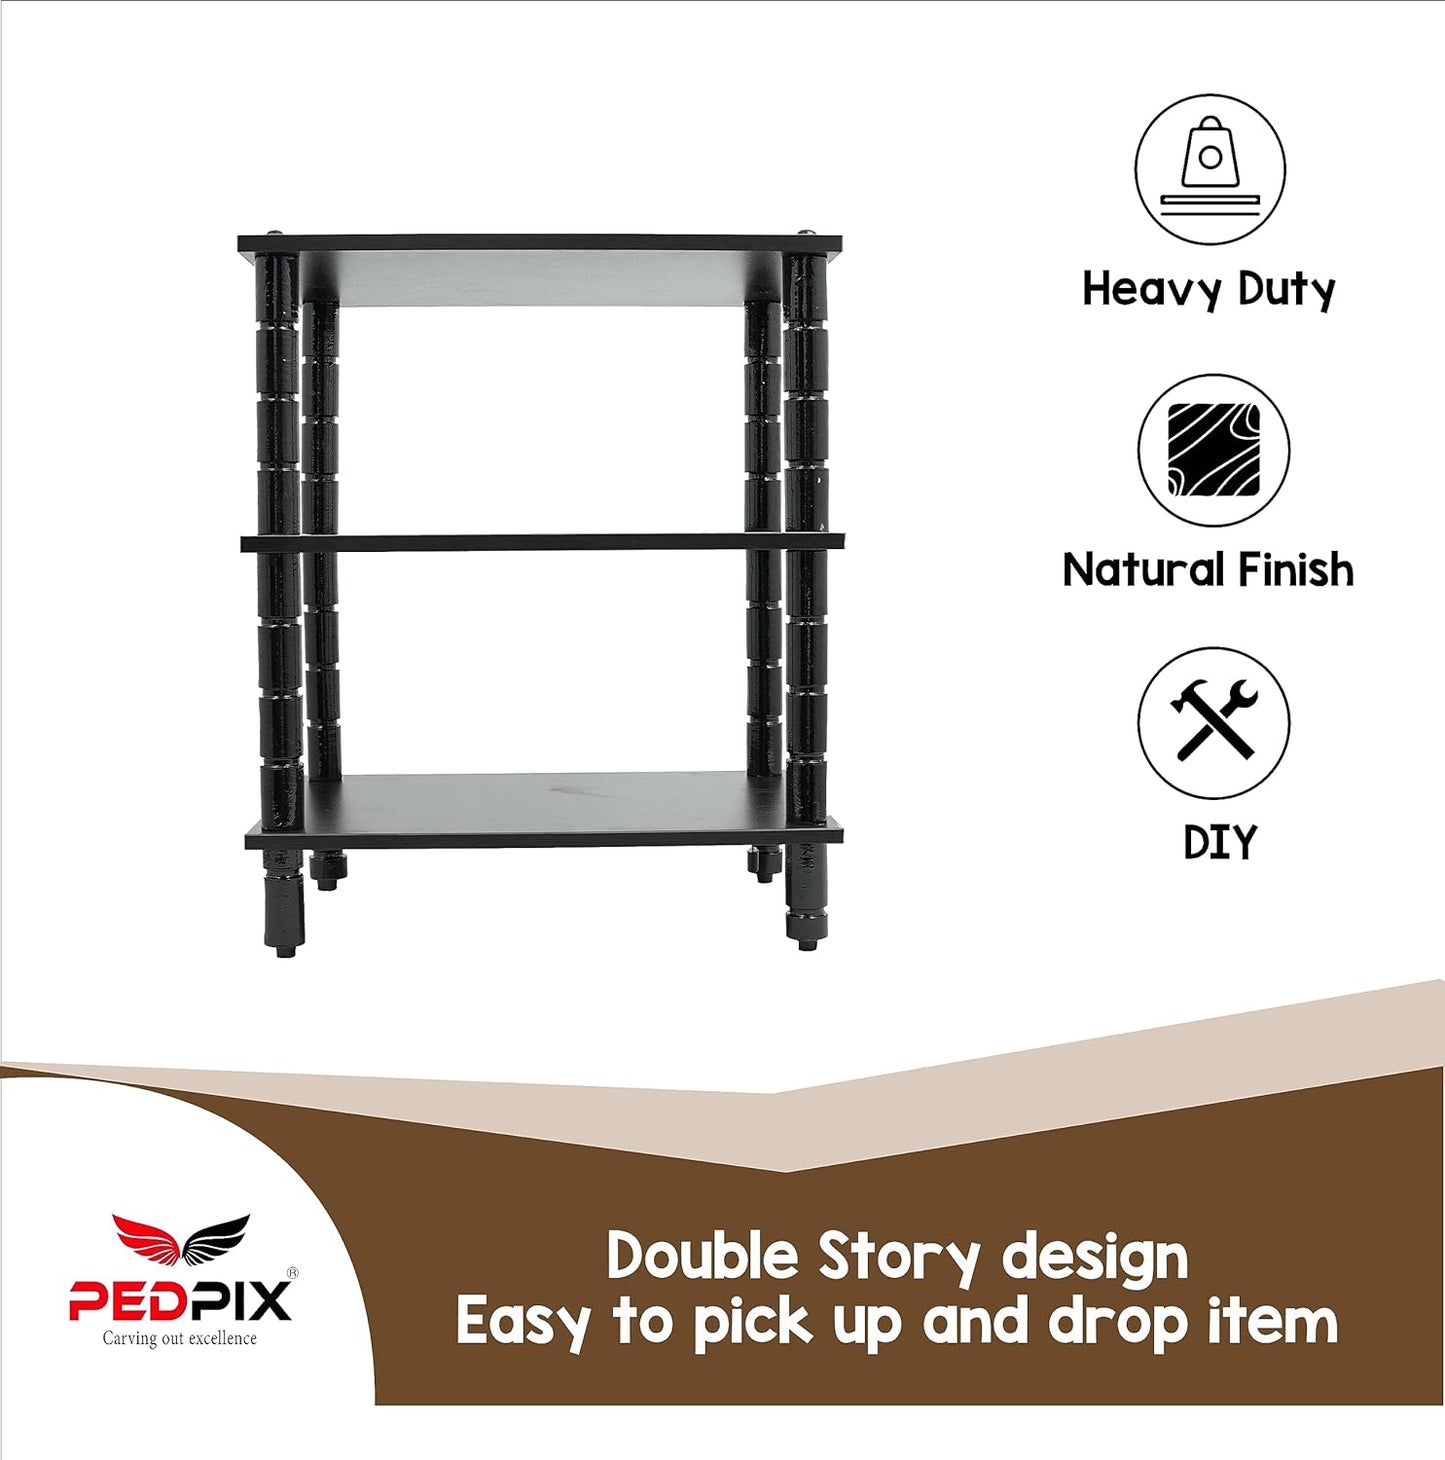 PEDPIX® Pure Wood Tv Entertainment Unit Set Top Box Stand Tv Panel Cabinet for Home Solid Wood Tv Entertainment Unit (Finish Color - Venge Black,DIY (Do-it-Yourself))